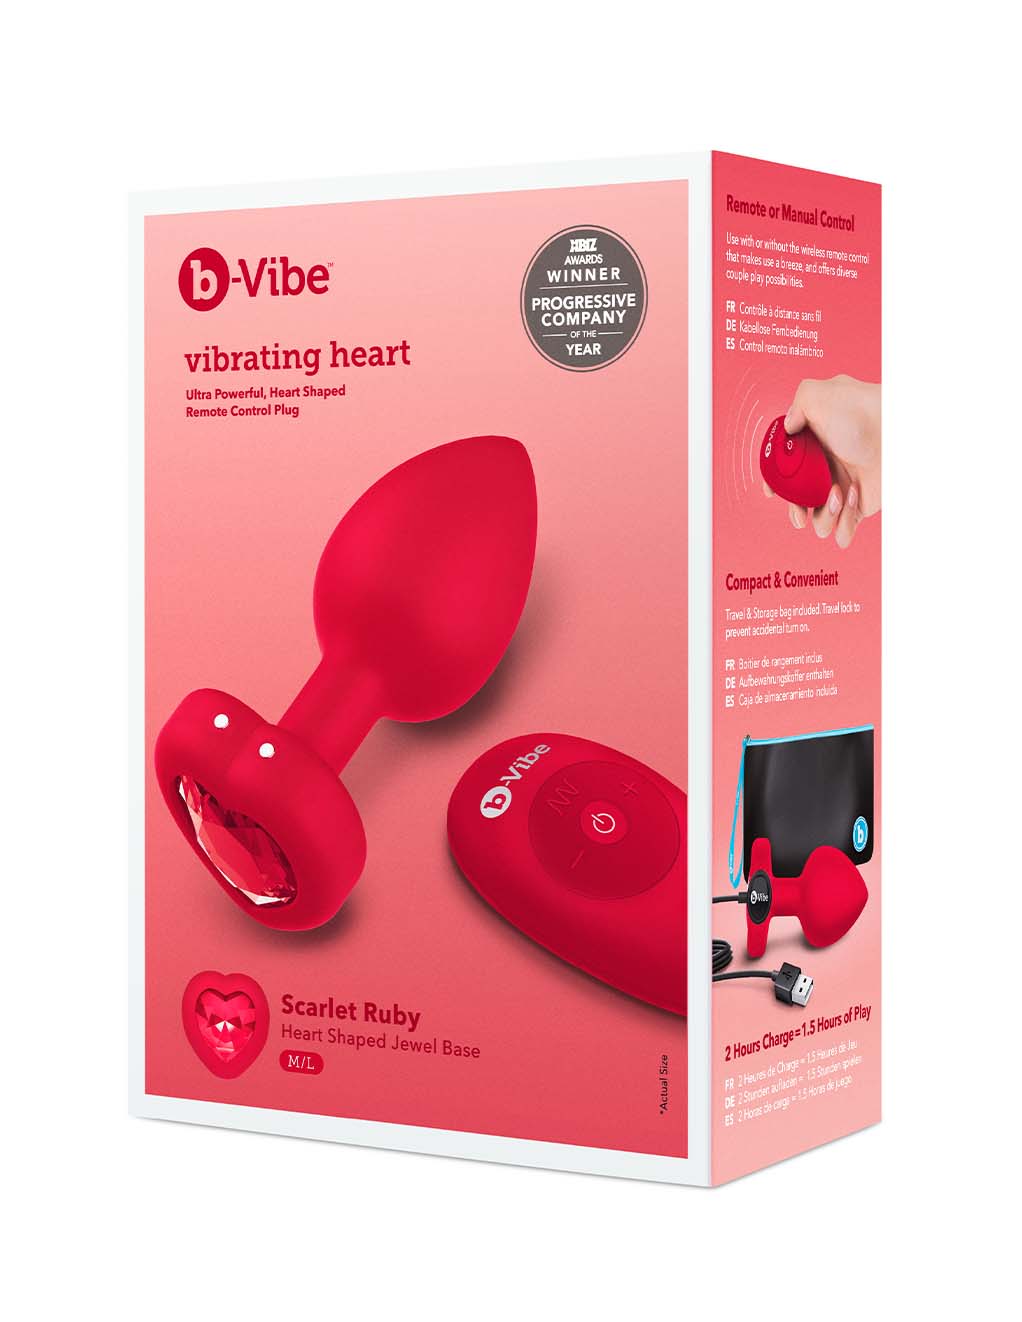 B-Vibe Vibrating Heart Plug M/L- Scarlet Ruby Box open